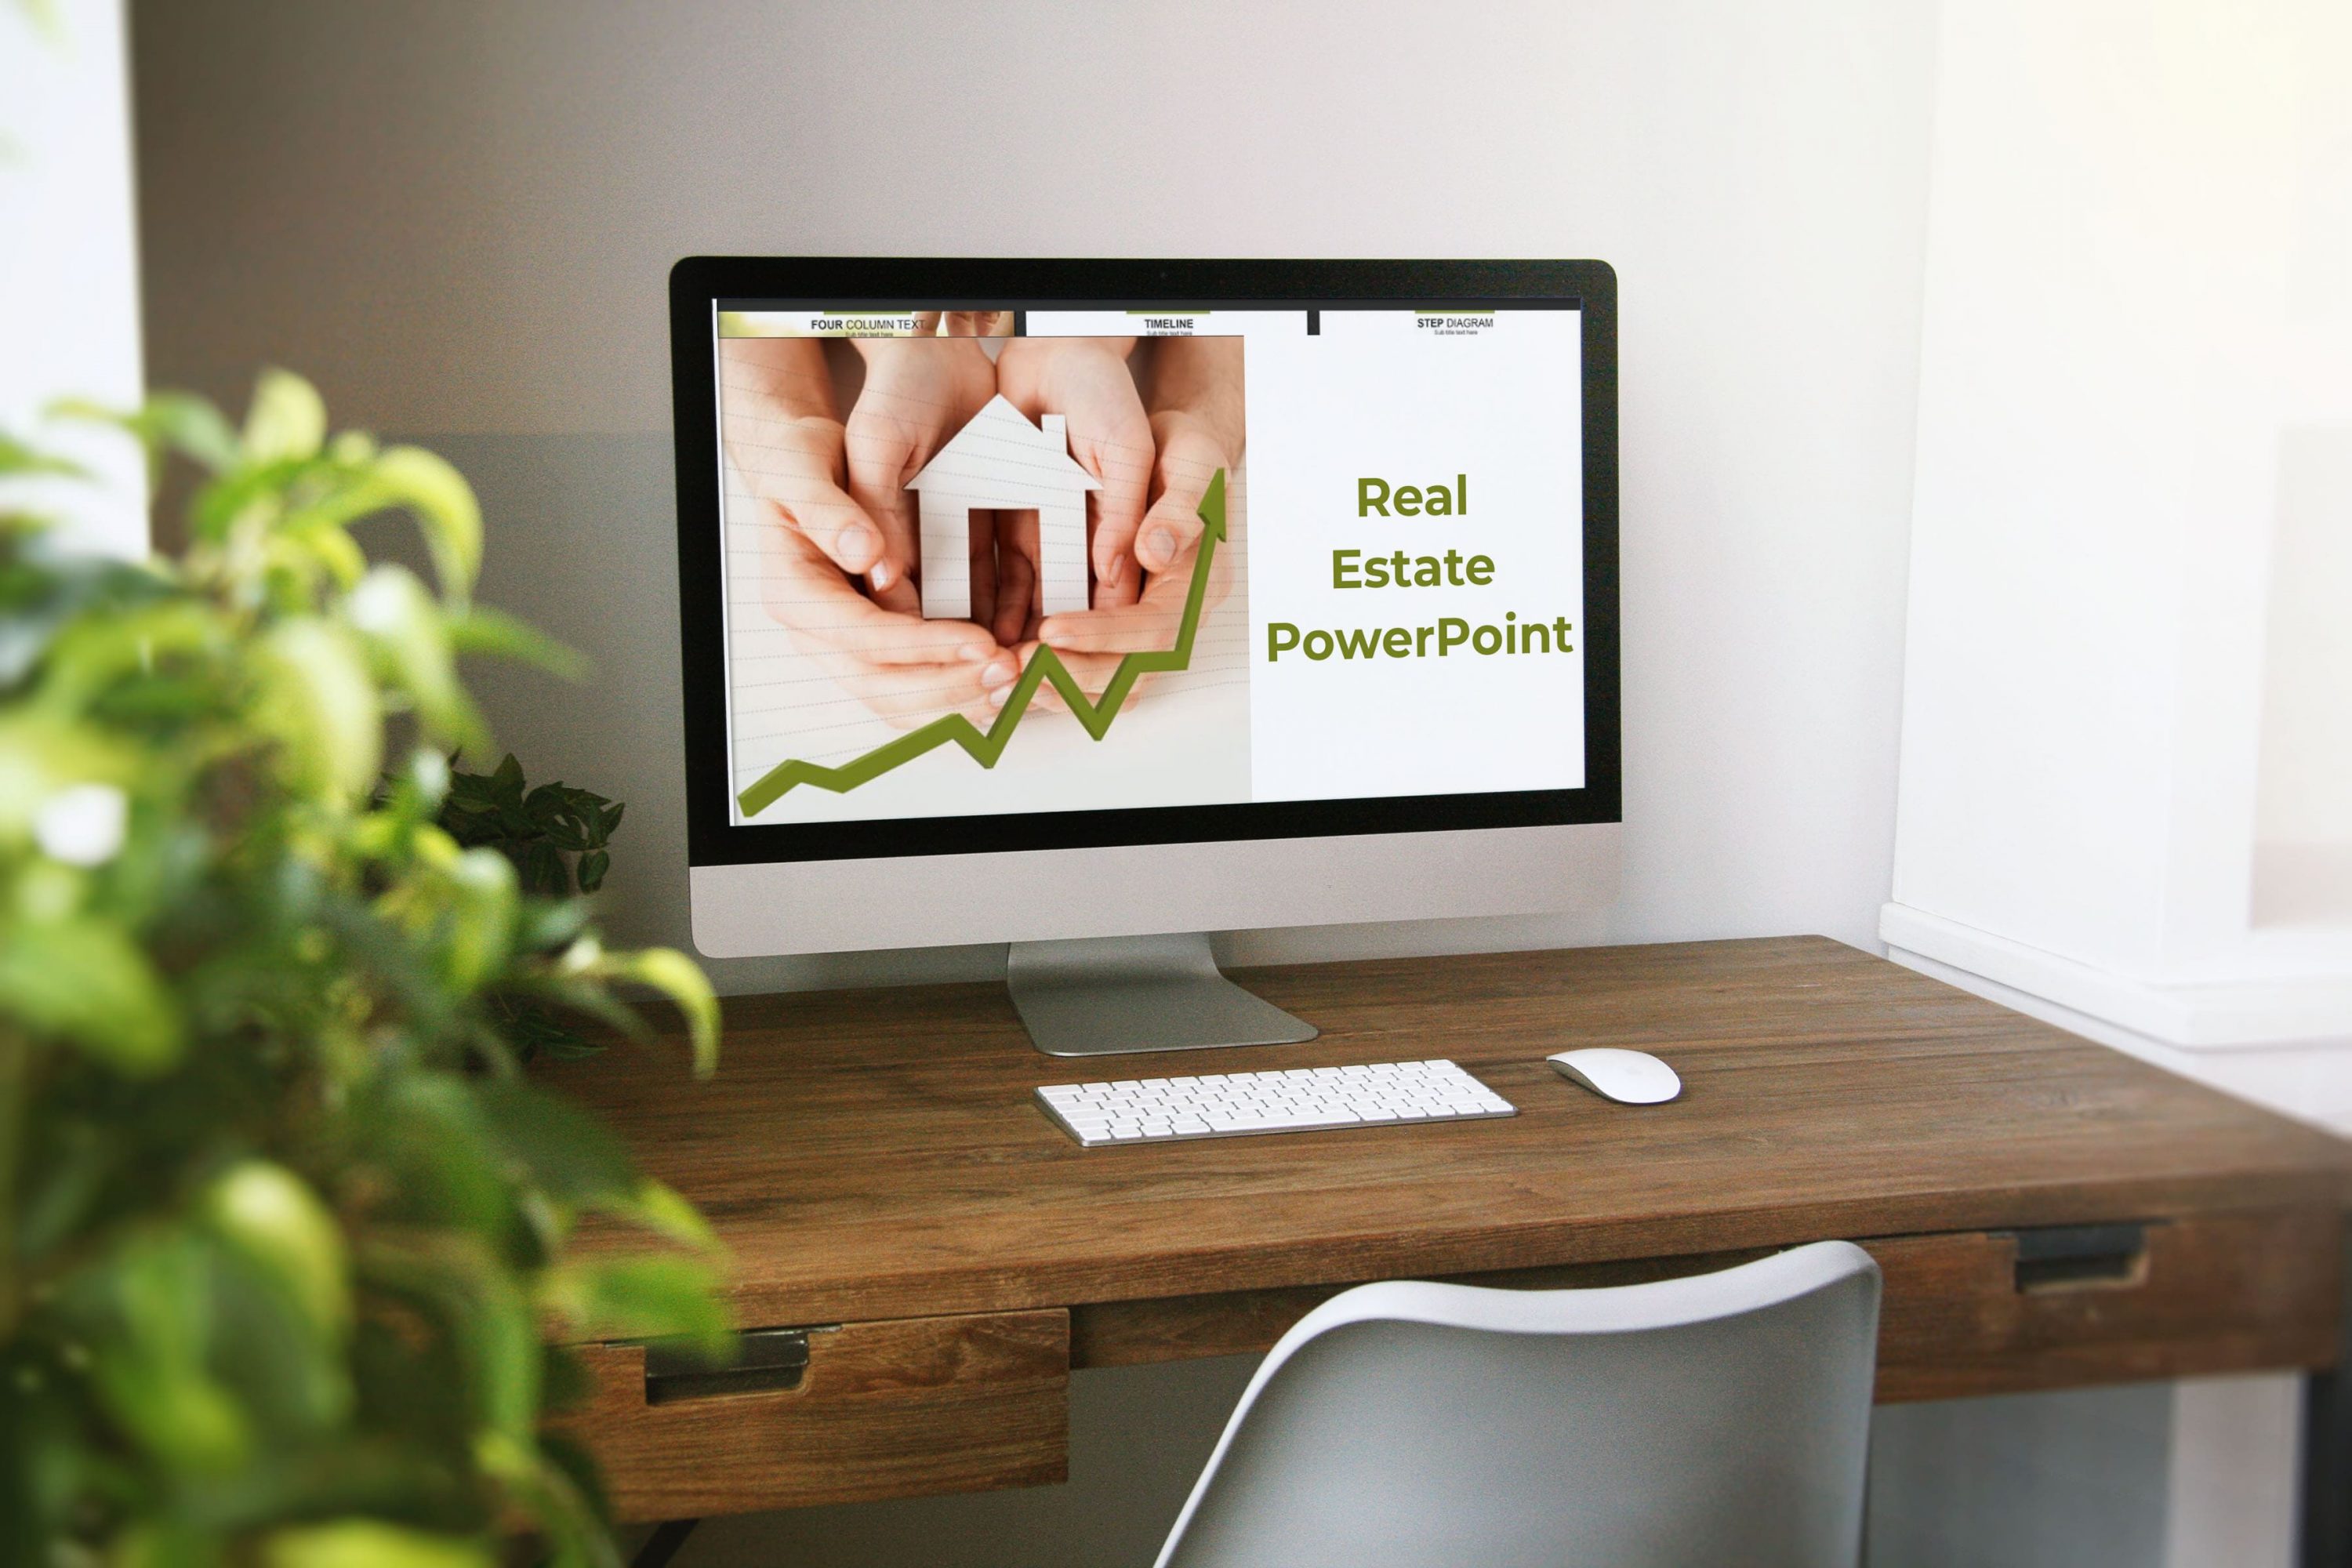 Real Estate PowerPoint Template by MasterBundles Desktop preview mockup image.